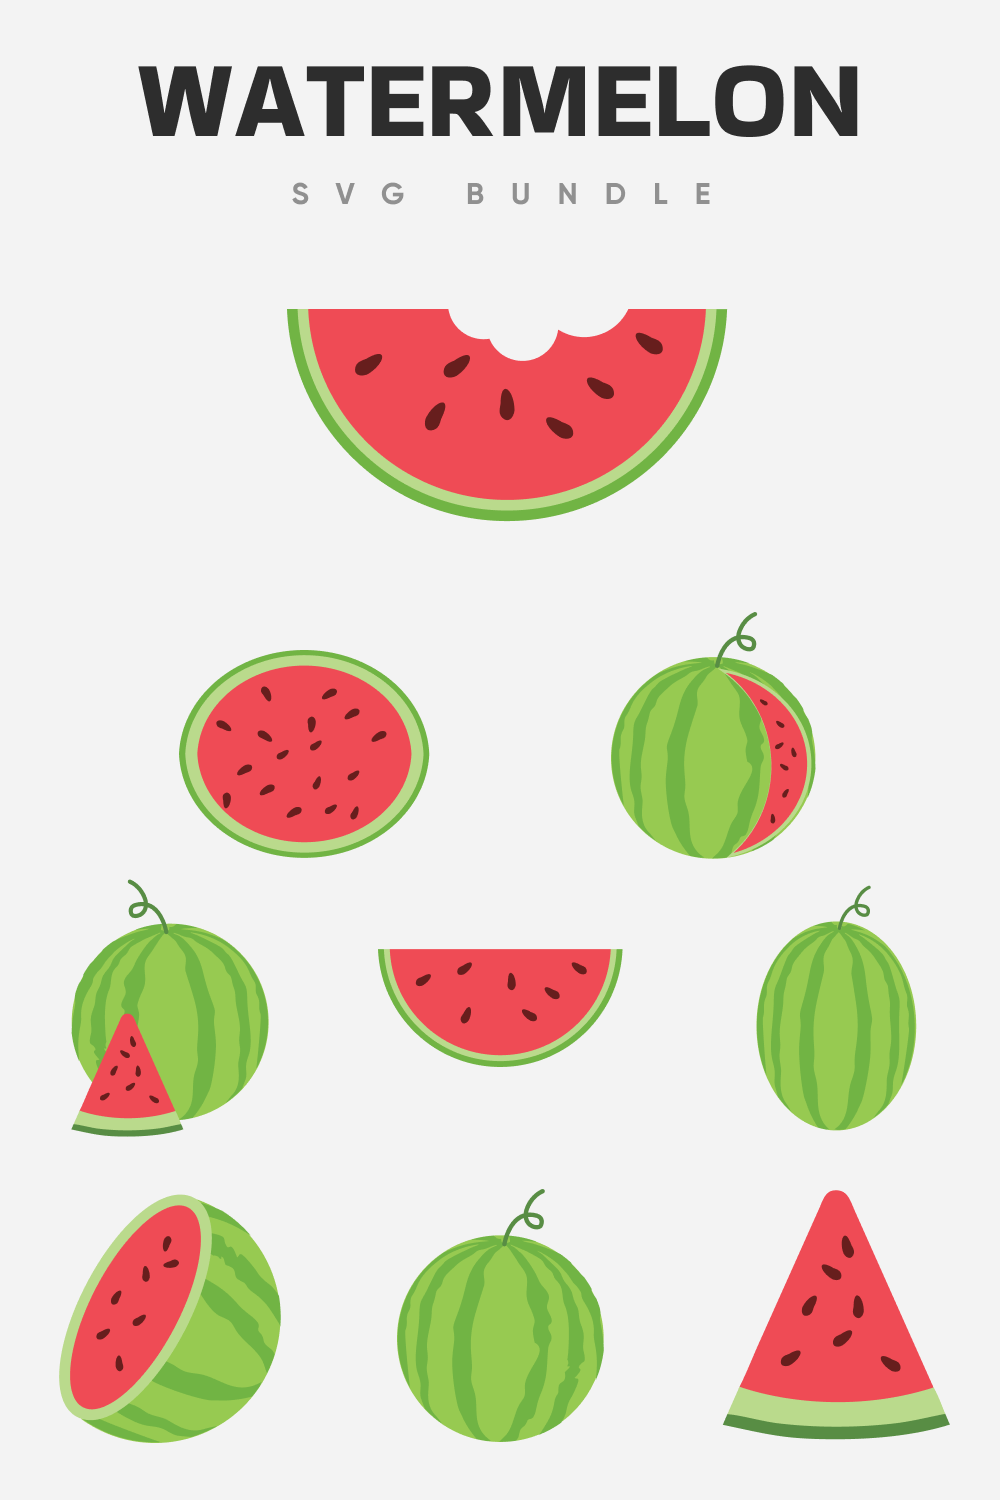 Diverse of watermelon parts.